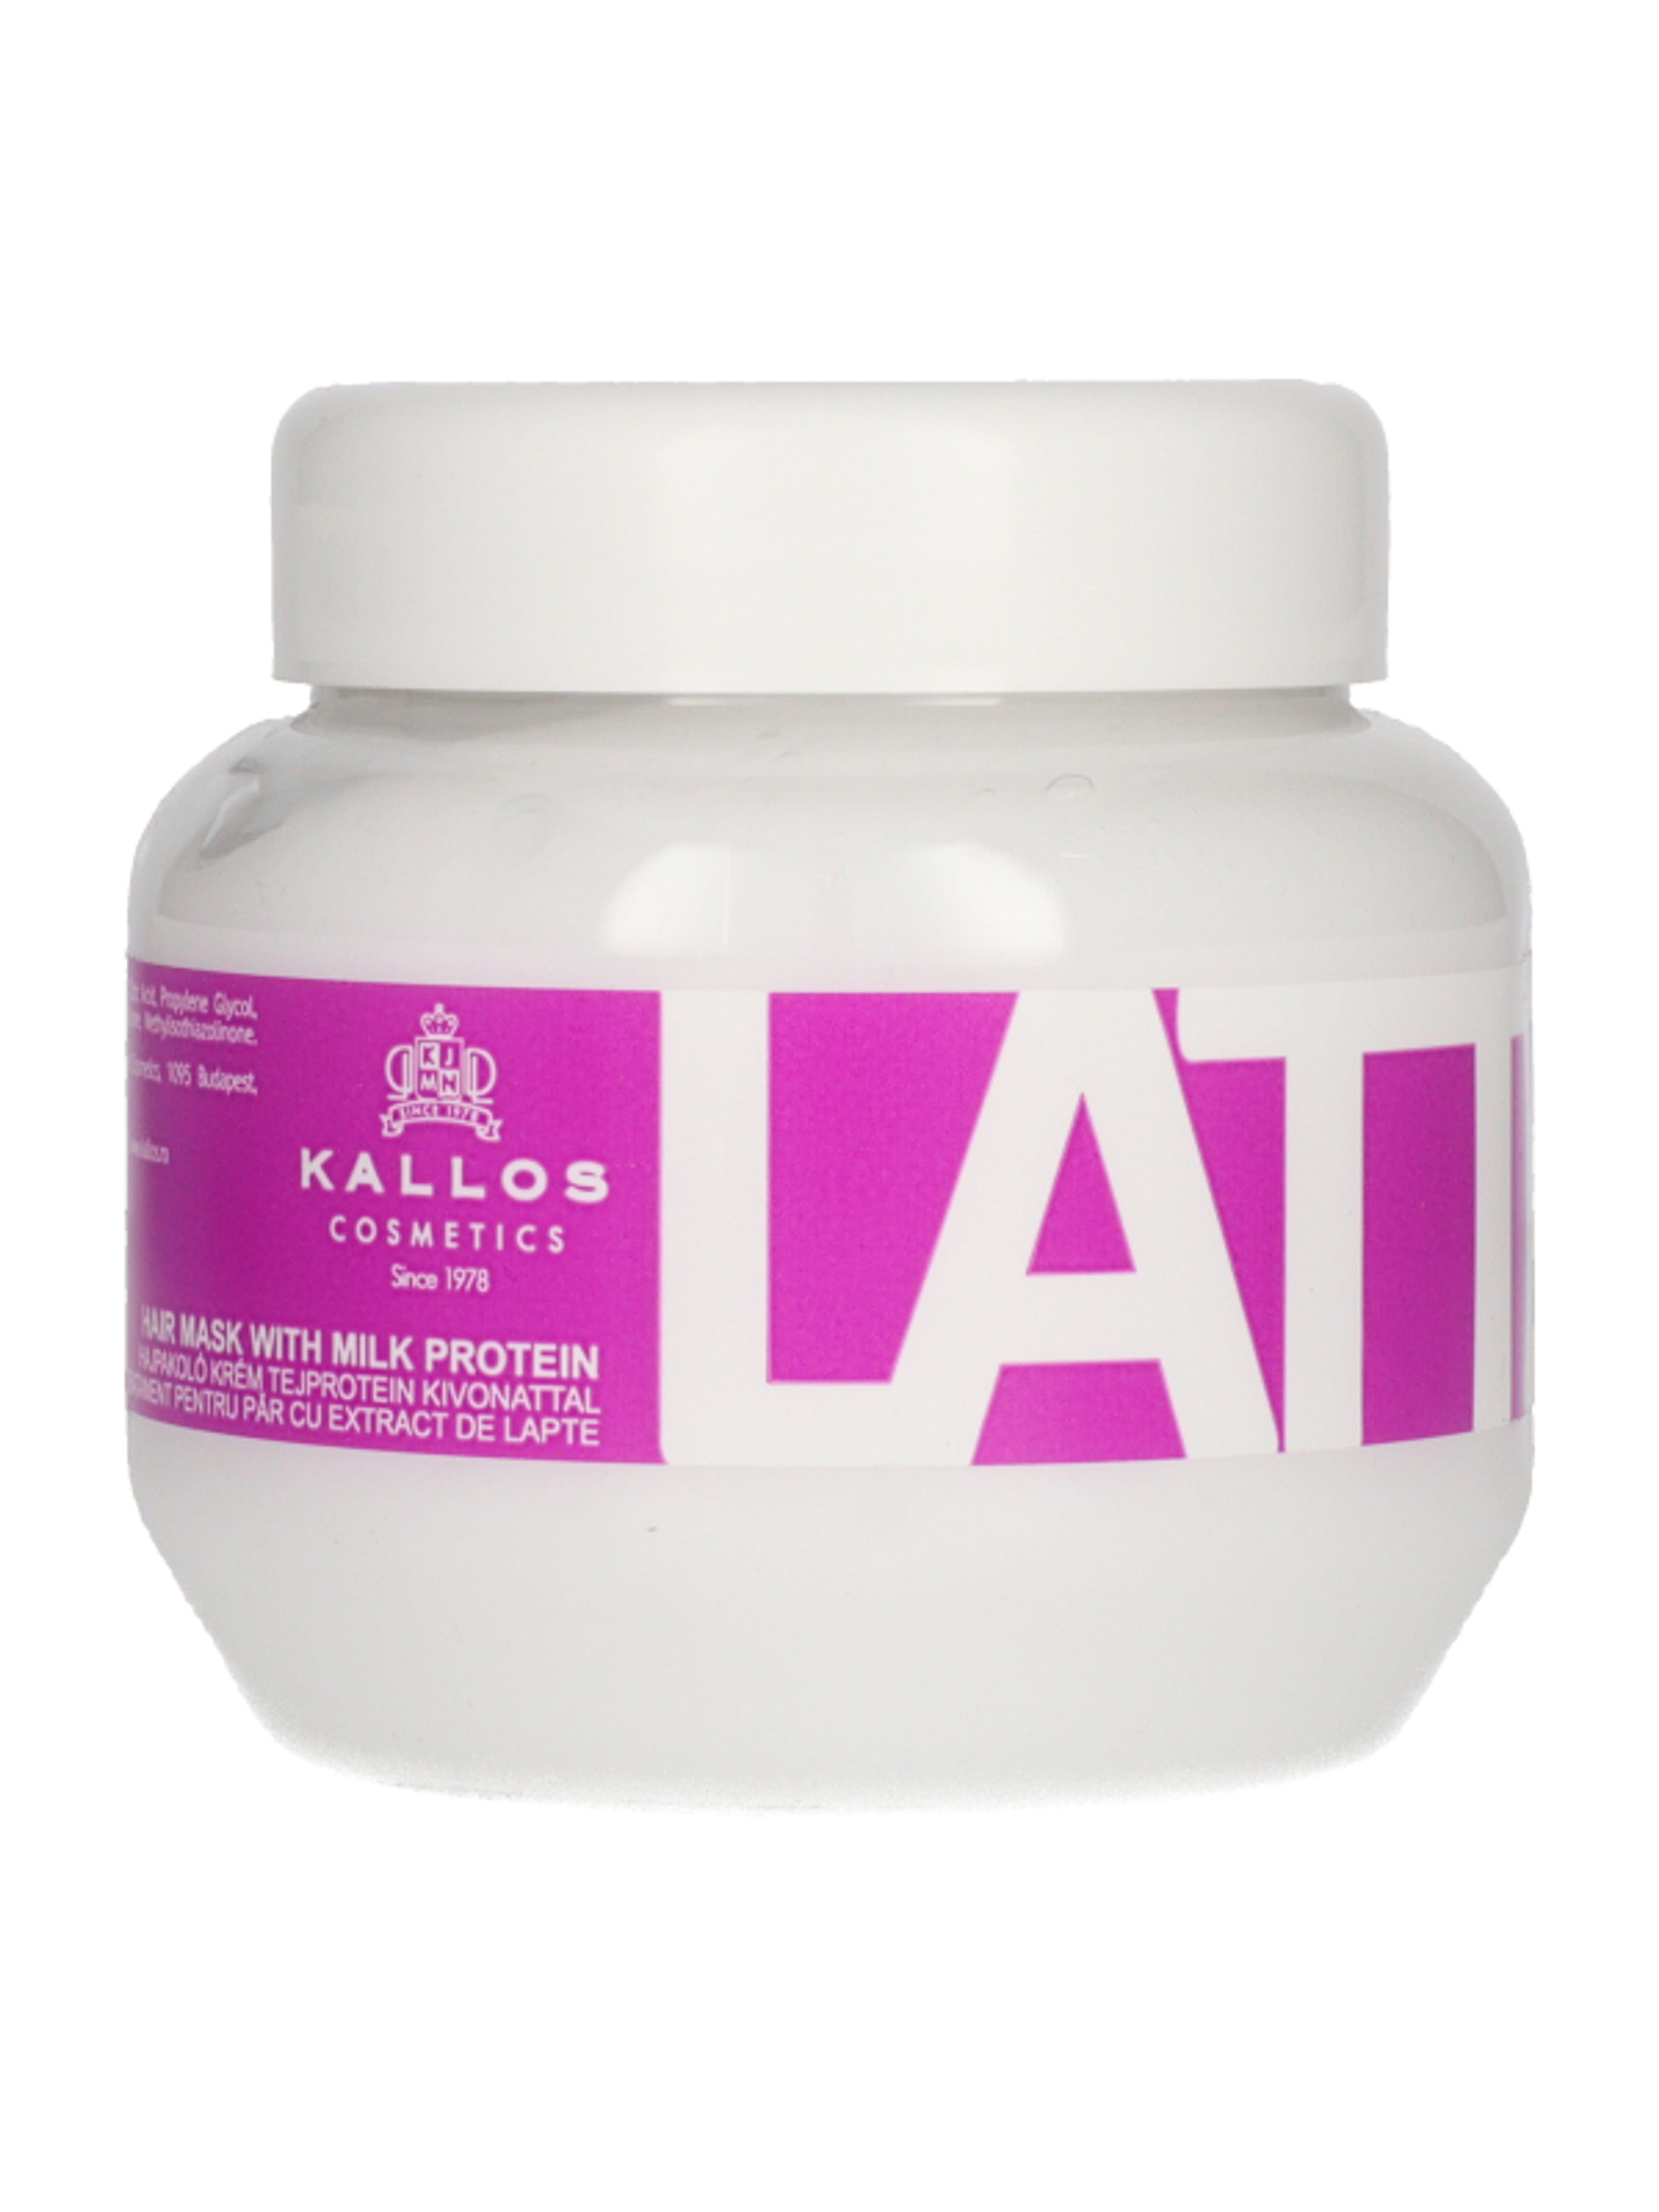 Kallos Latte hajpakoló kérm tejprotein kivonattal - 275 ml-1